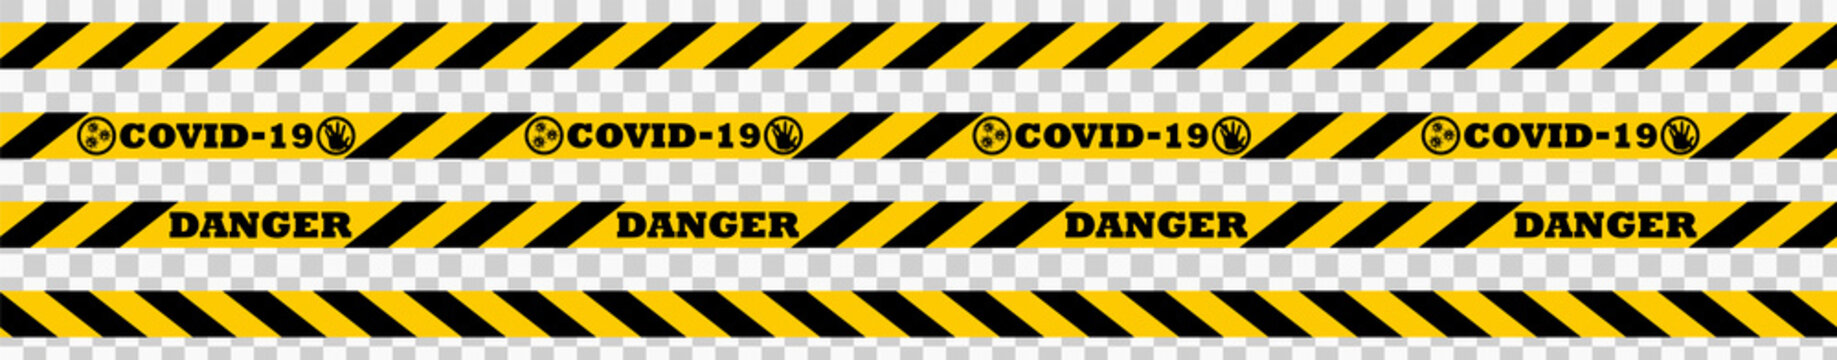 Corona virus 2019-nCoV Quarantine Ribbon Vector illustration. Global Pandemic COVID-19 Caution Concept Symbol. Warning coronavirus. Isolated on transparent background. Vector